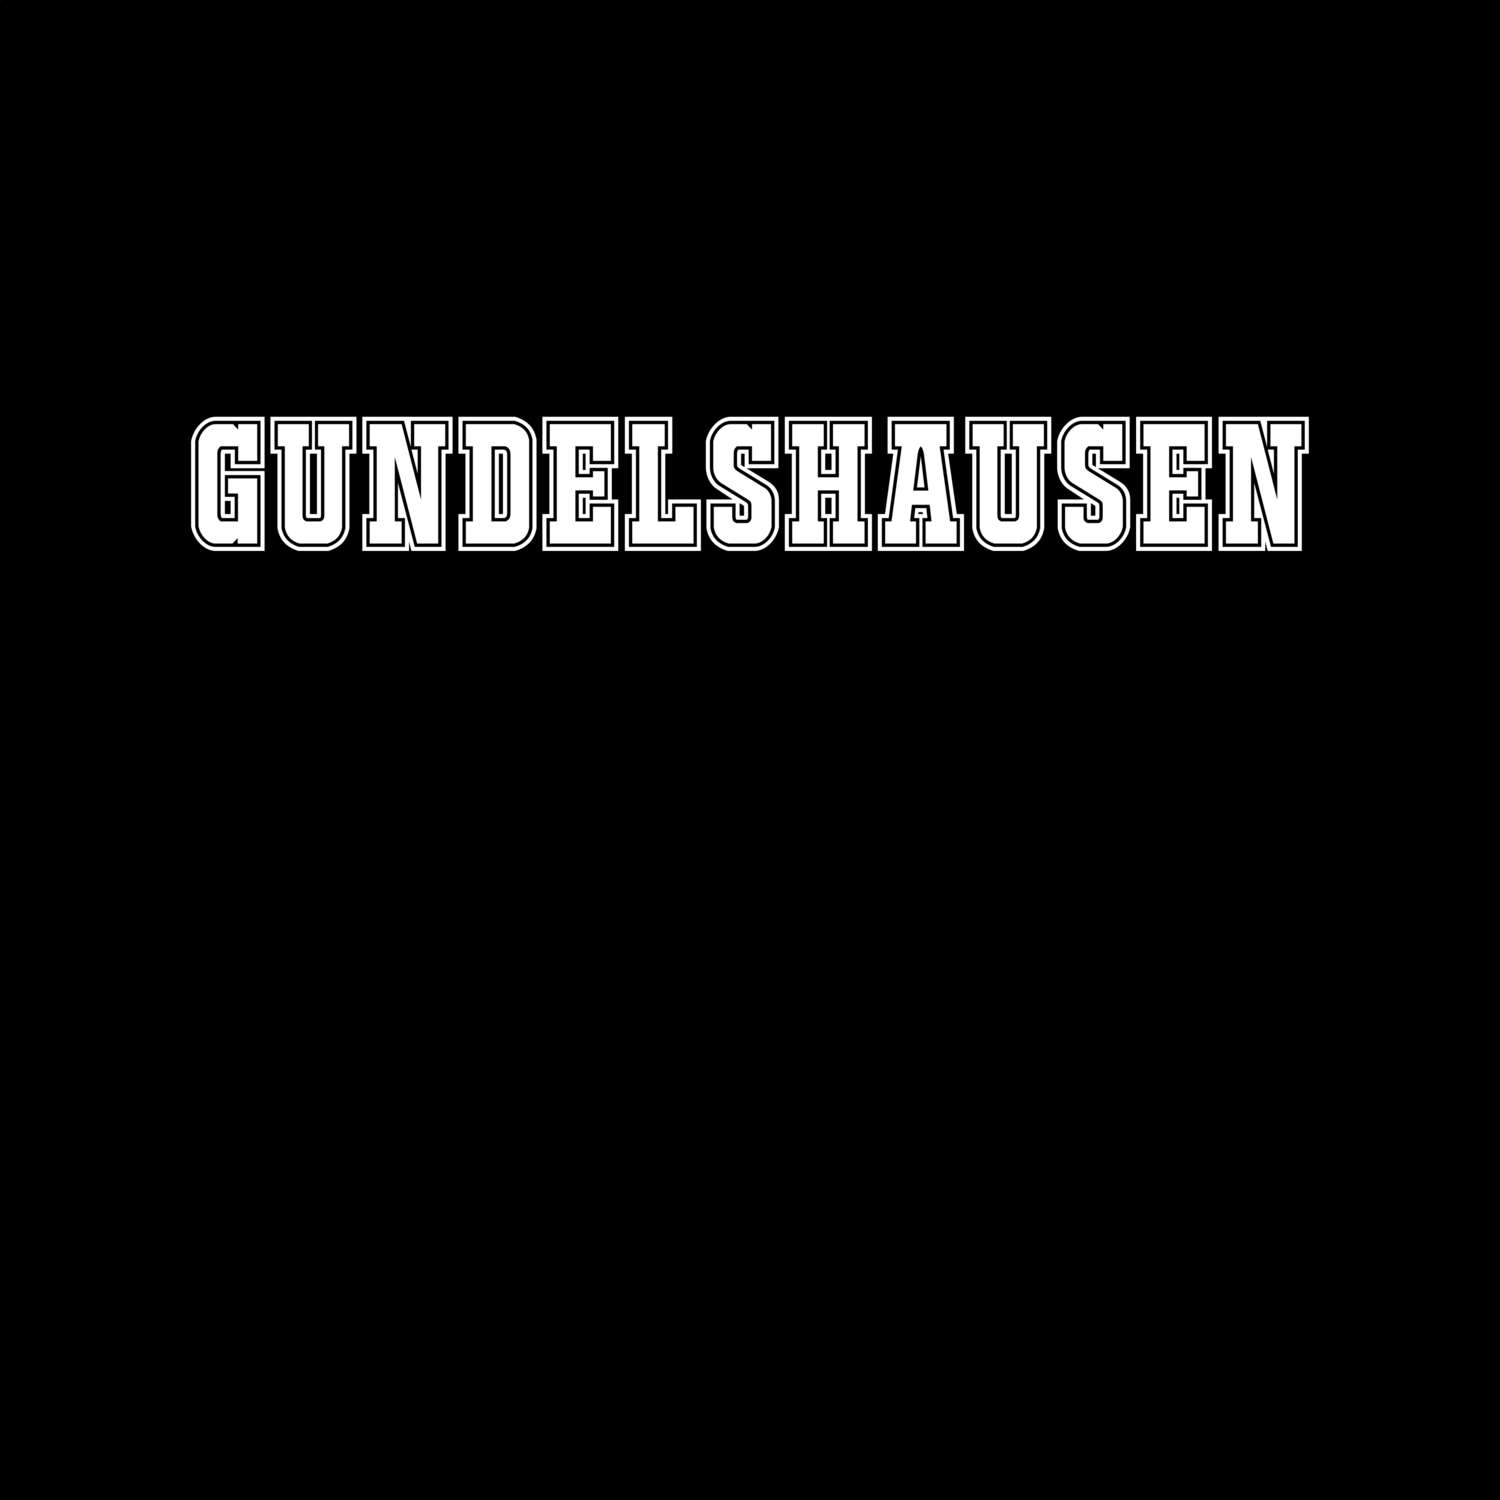 Gundelshausen T-Shirt »Classic«